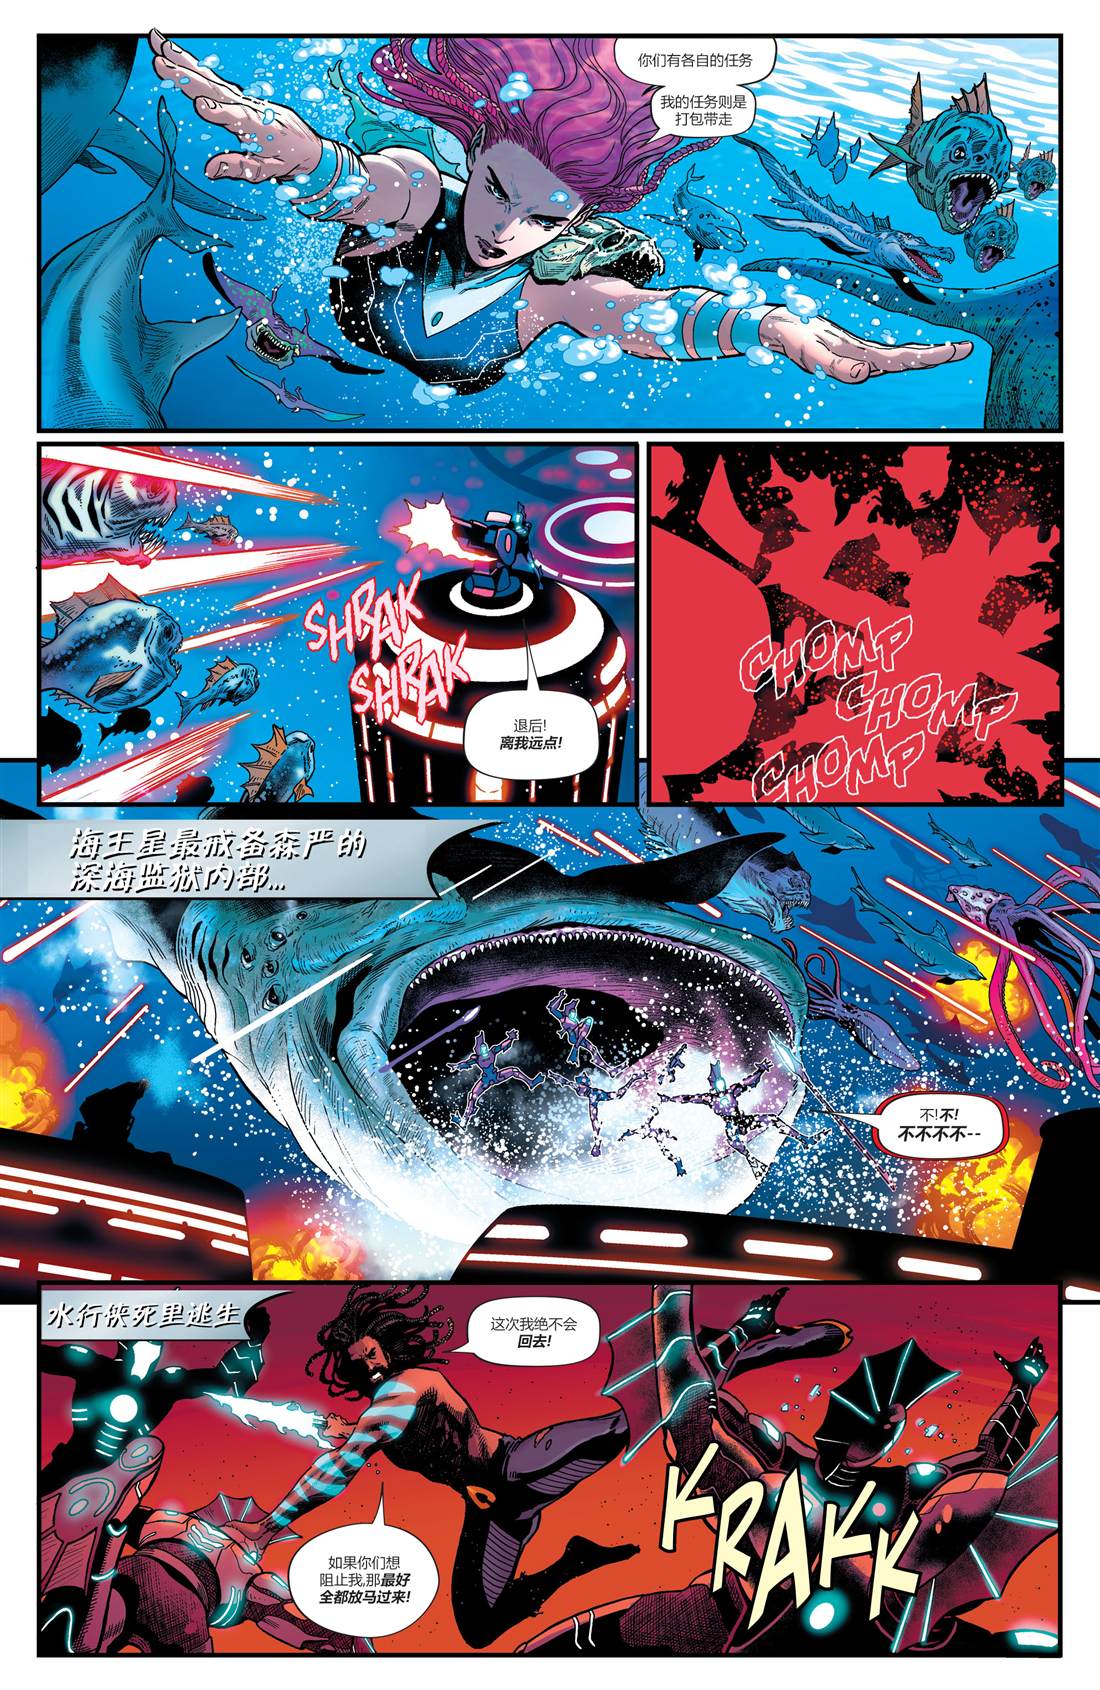 DC未來態 - 水行俠#2 - 3